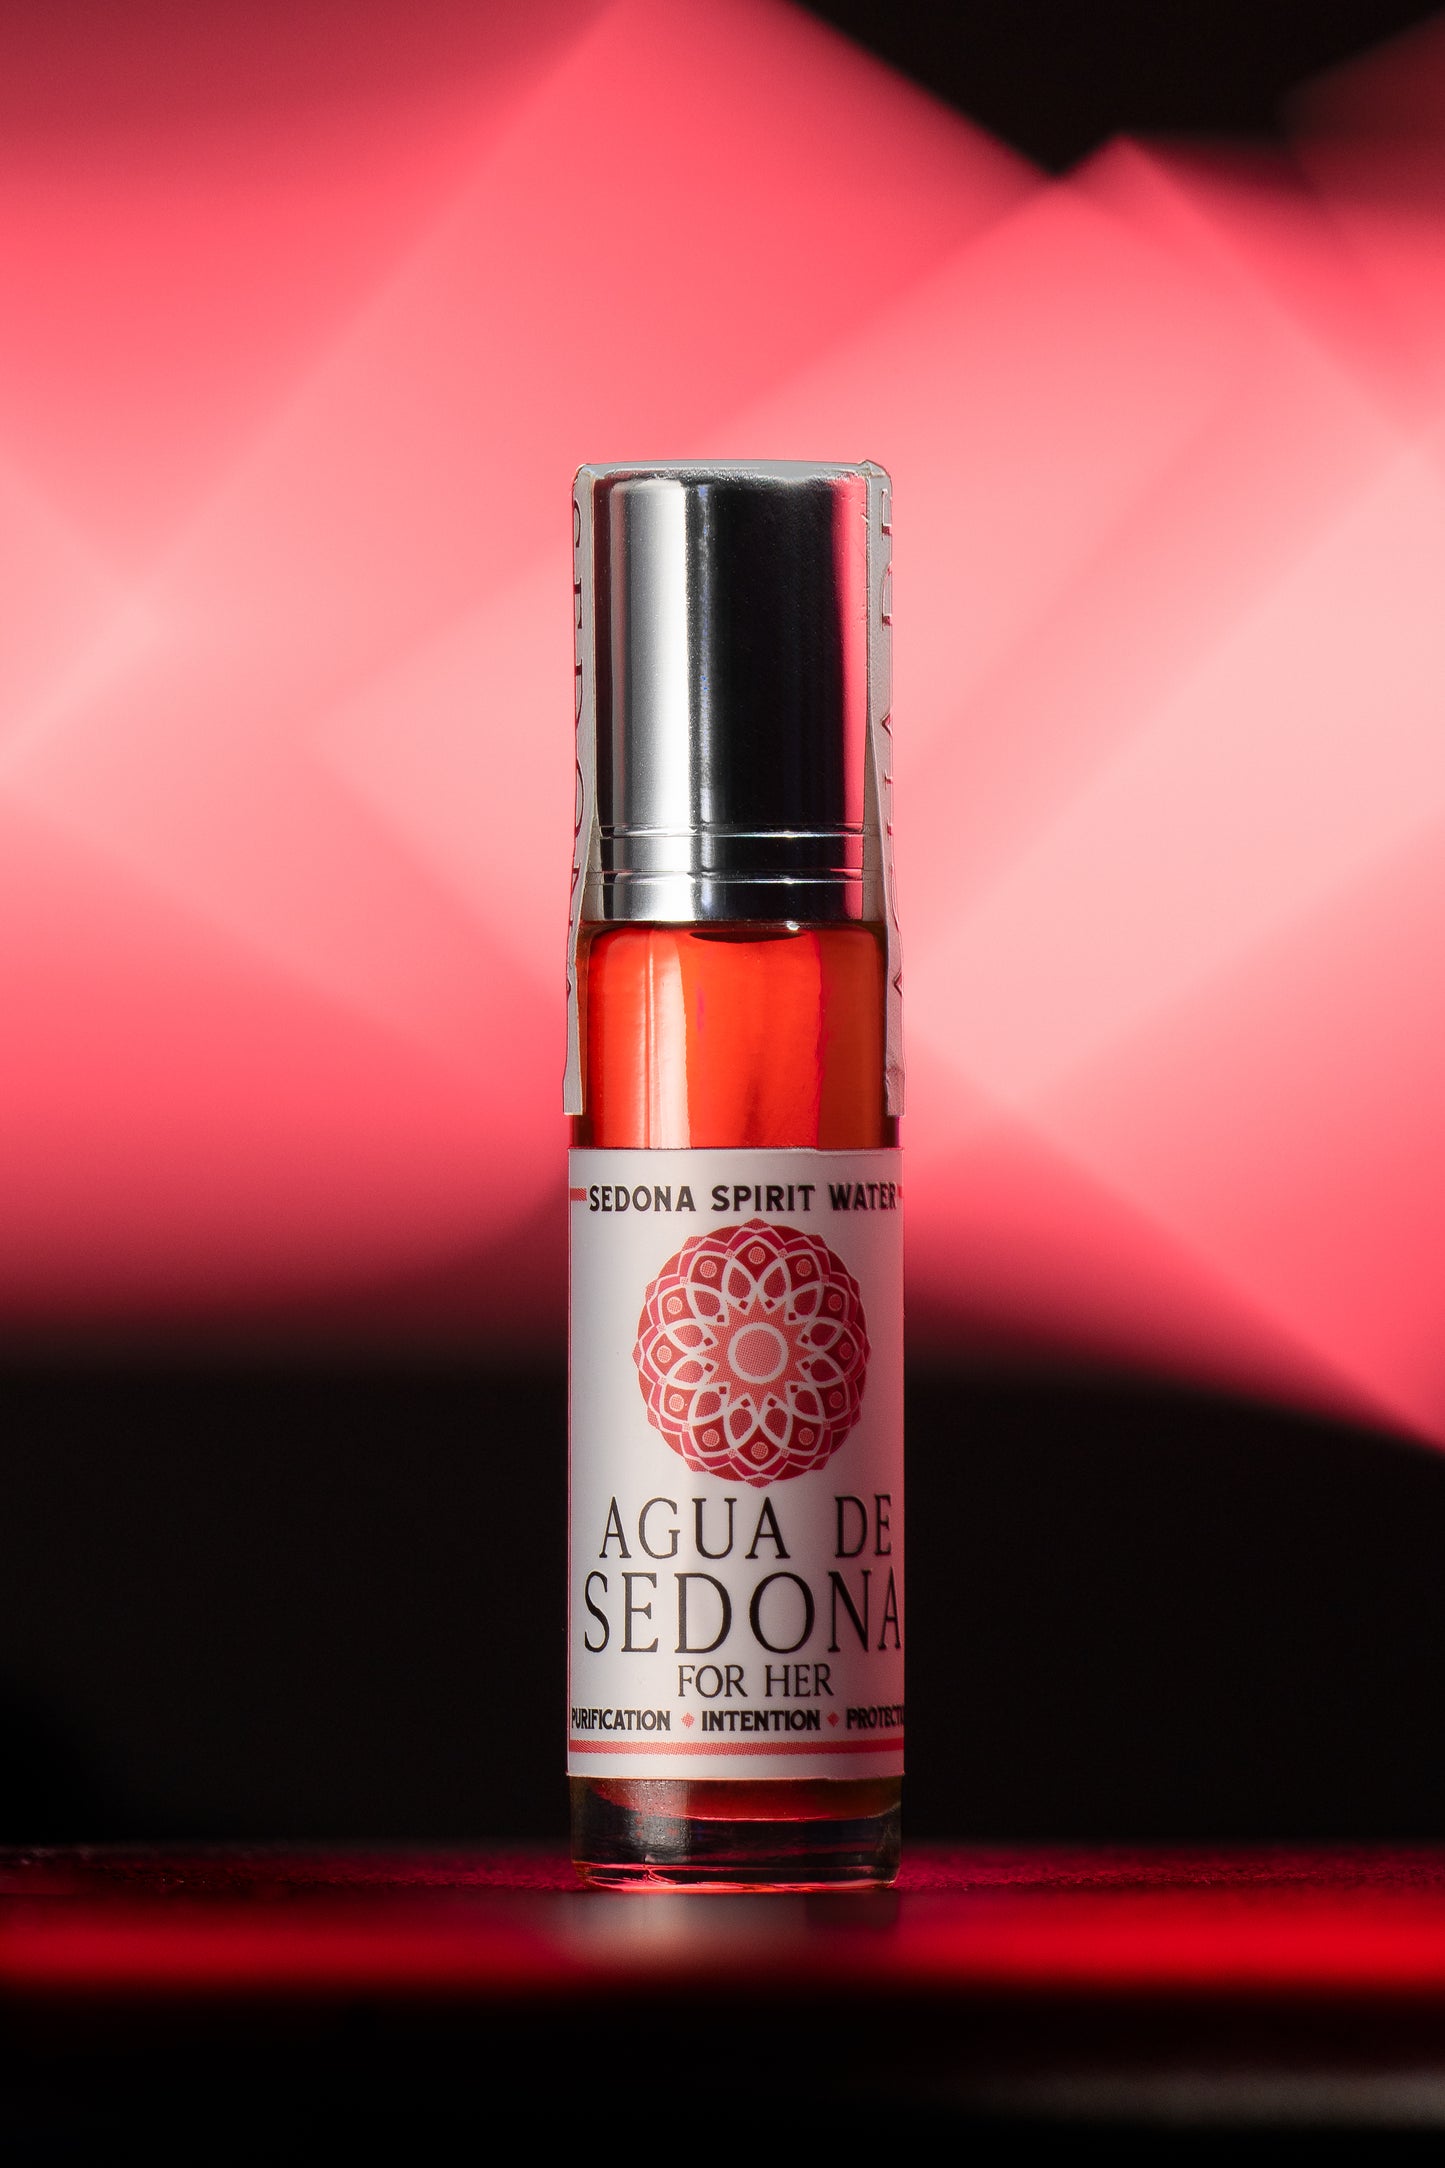 10 ml "The Rose Blend" of Agua de Sedona